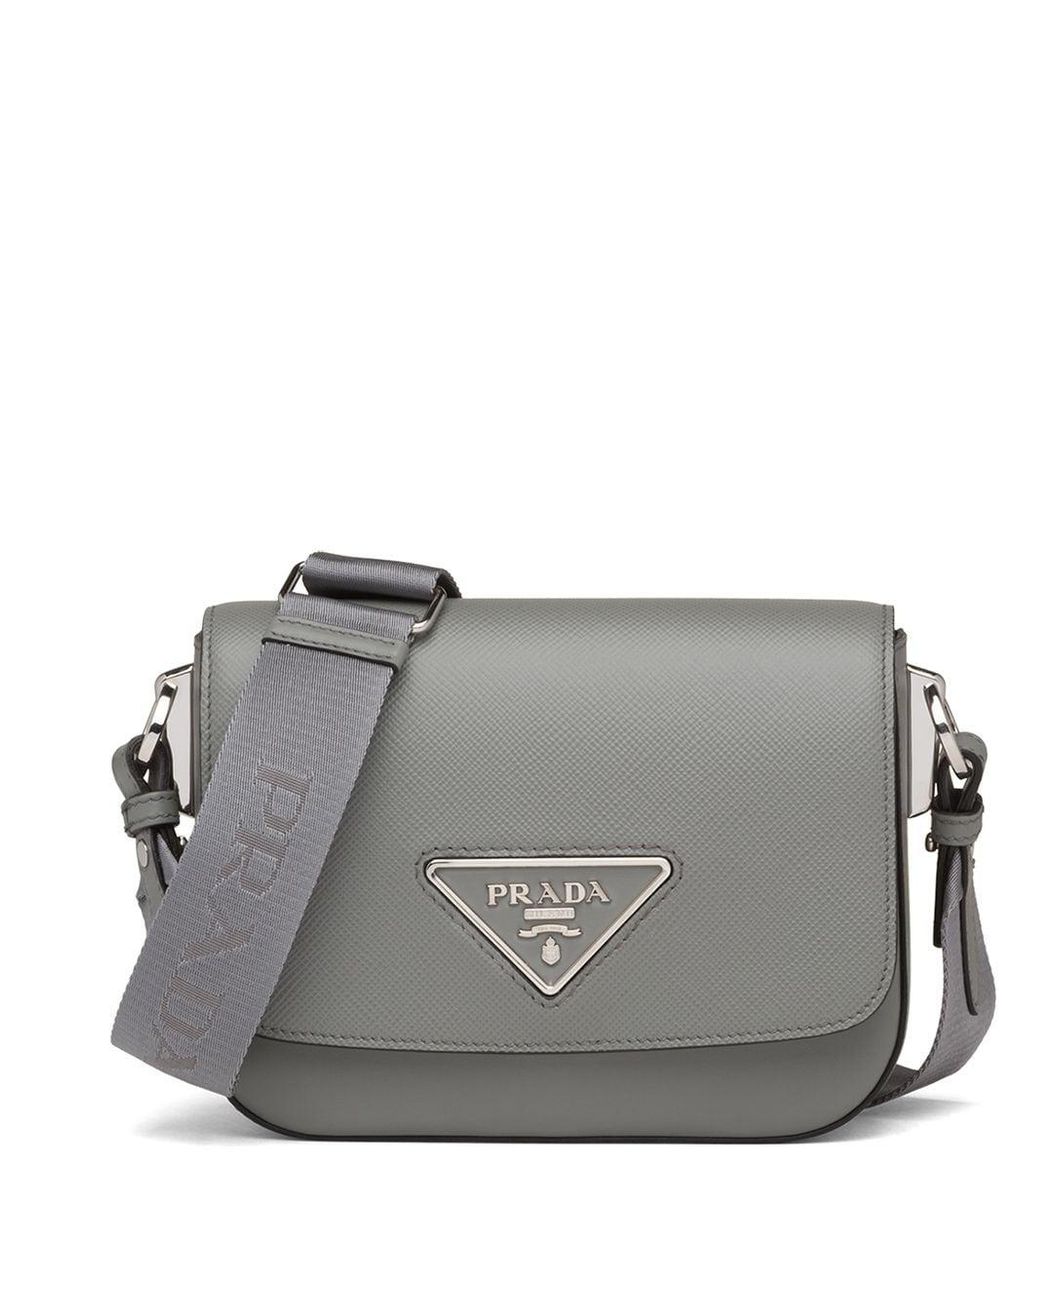 Prada Identity Crossbody Bag in Gray | Lyst